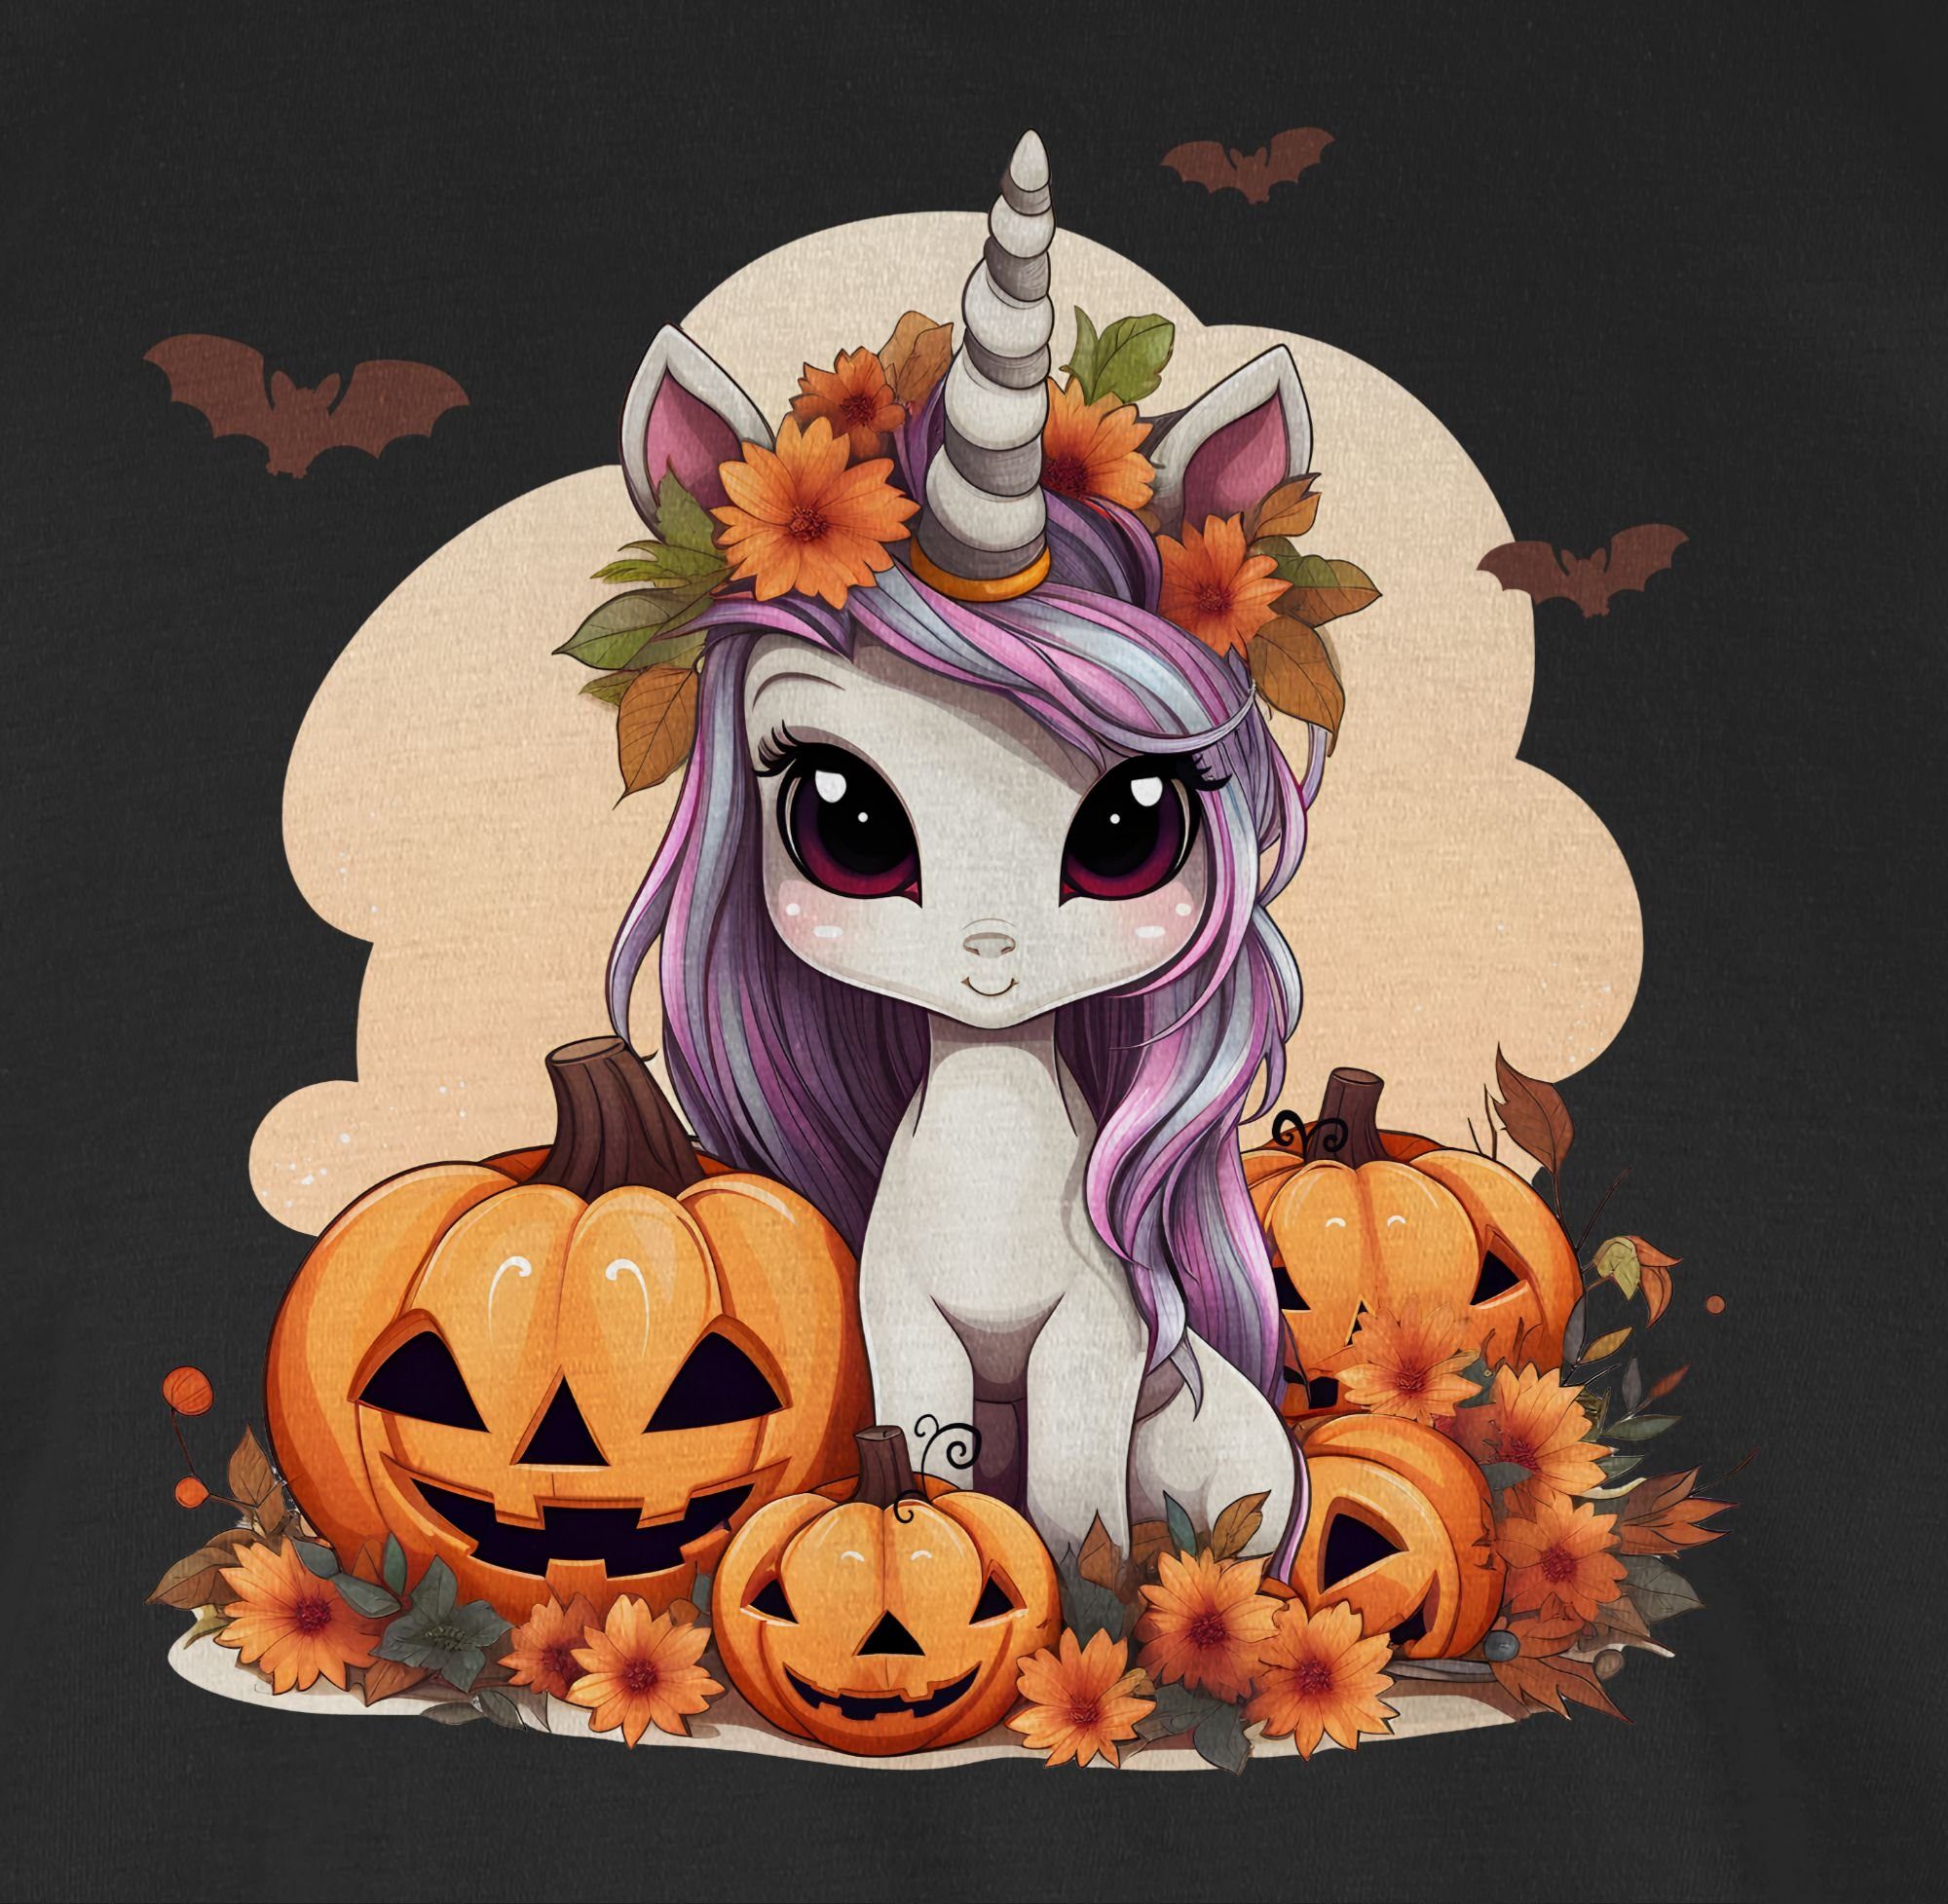 Süßes Shirtracer Unicorn T-Shirt Herren Einhorn Kostüme 01 Schwarz Halloween Kürbis Halloween